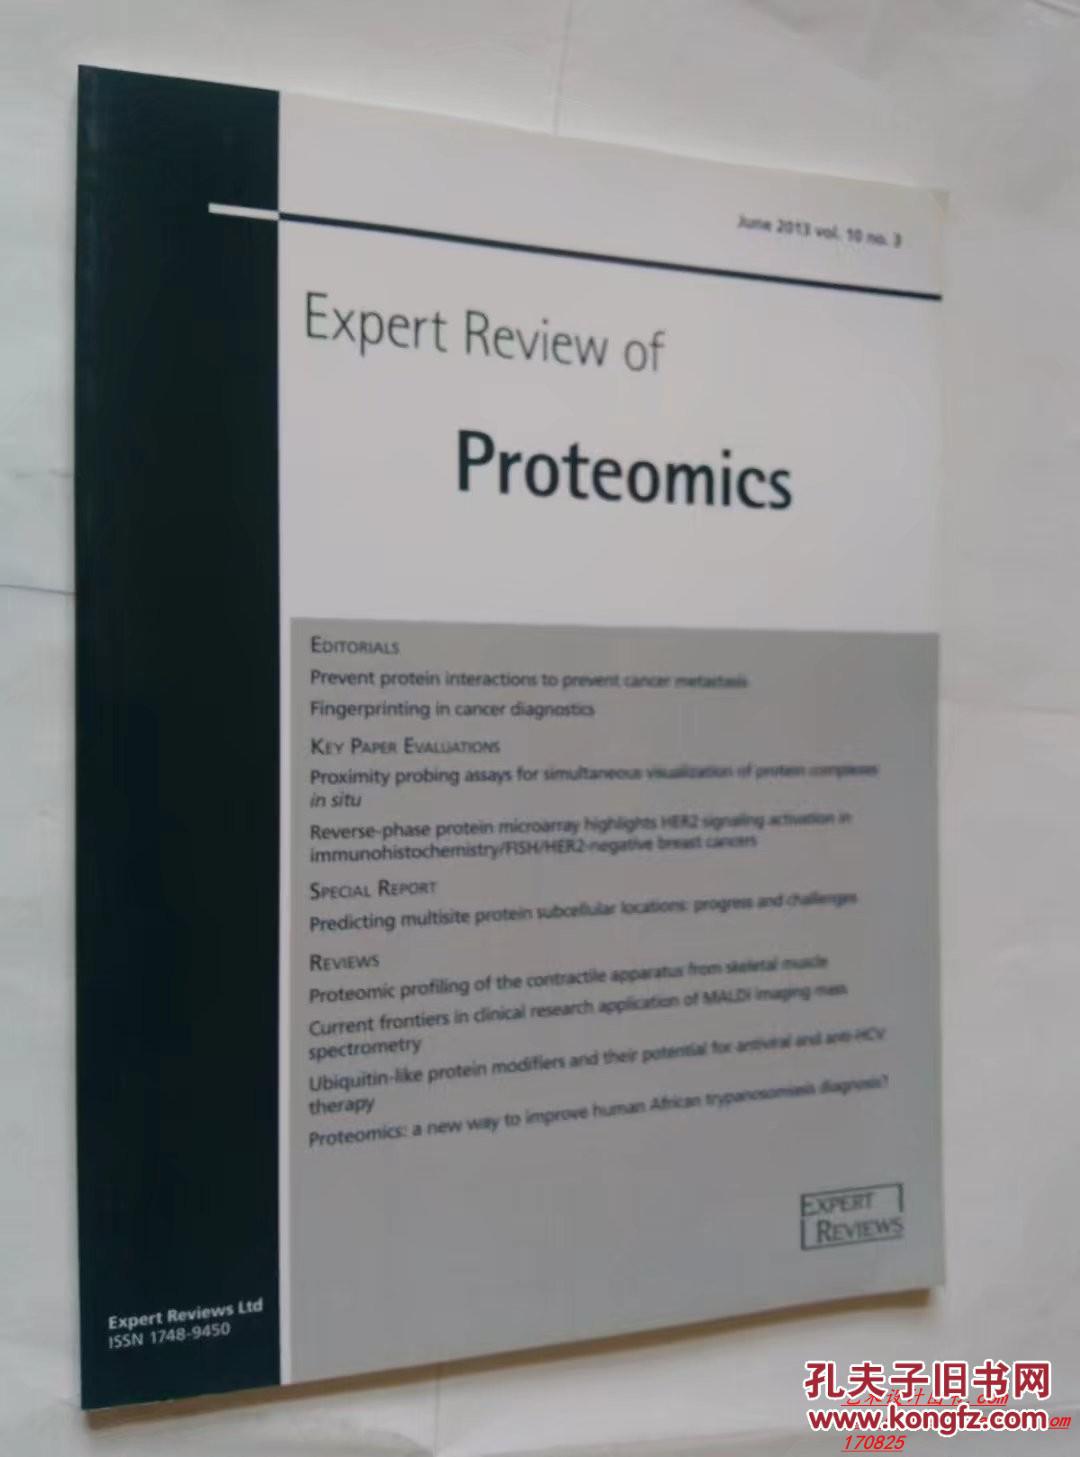 Expert Review of Proteomics  2013/06蛋白質組學學術原版期刊